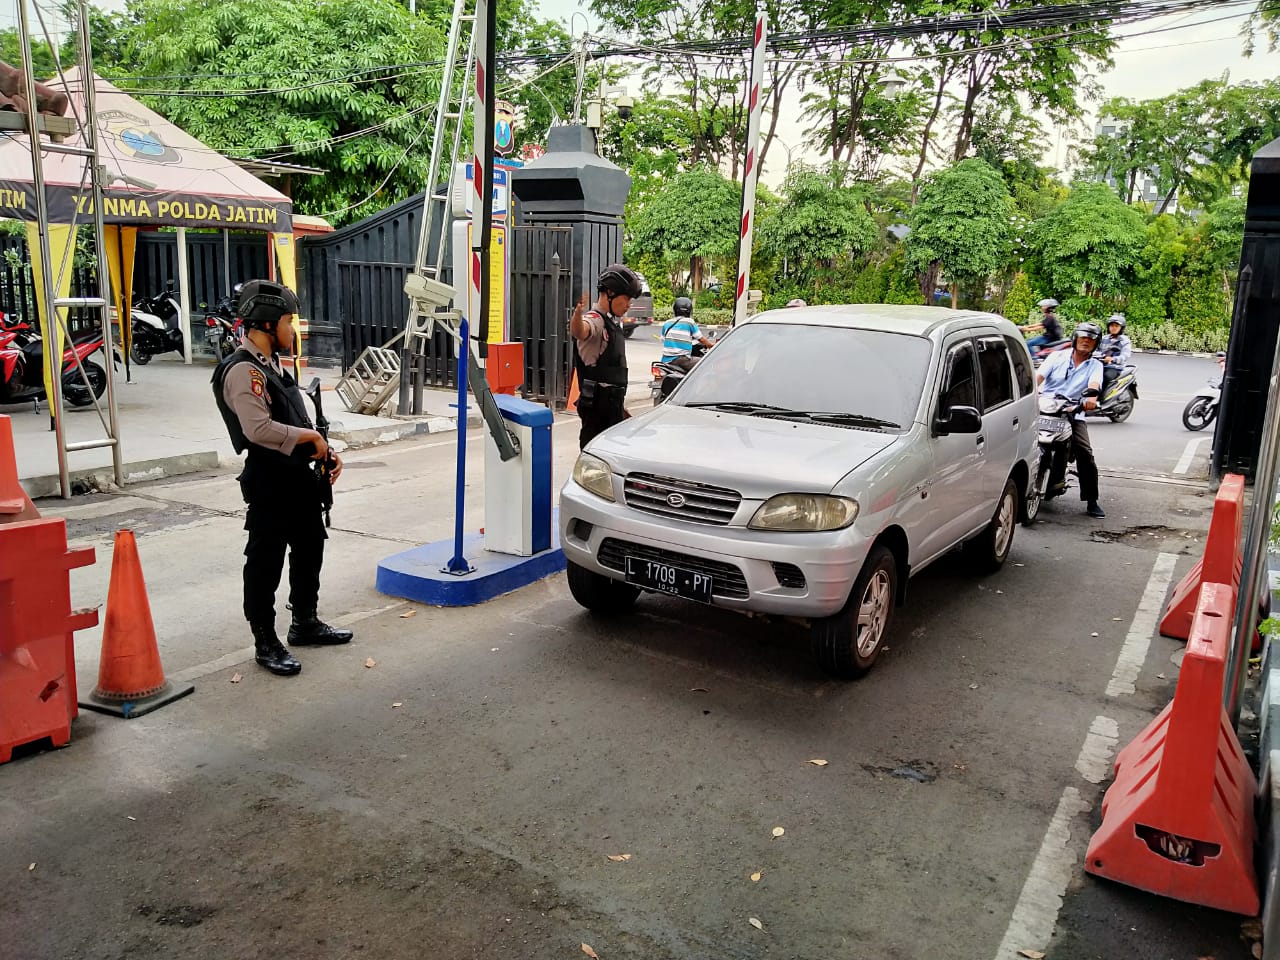 Petugas kepolisian Polda Jatim melakukan pengecekan terhadap kendaraan yang akan masuk ke Gedung Polda Jatim, Surabaya, Rabu 13 November 2019. (Foto: Fariz/ngopibareng.id)